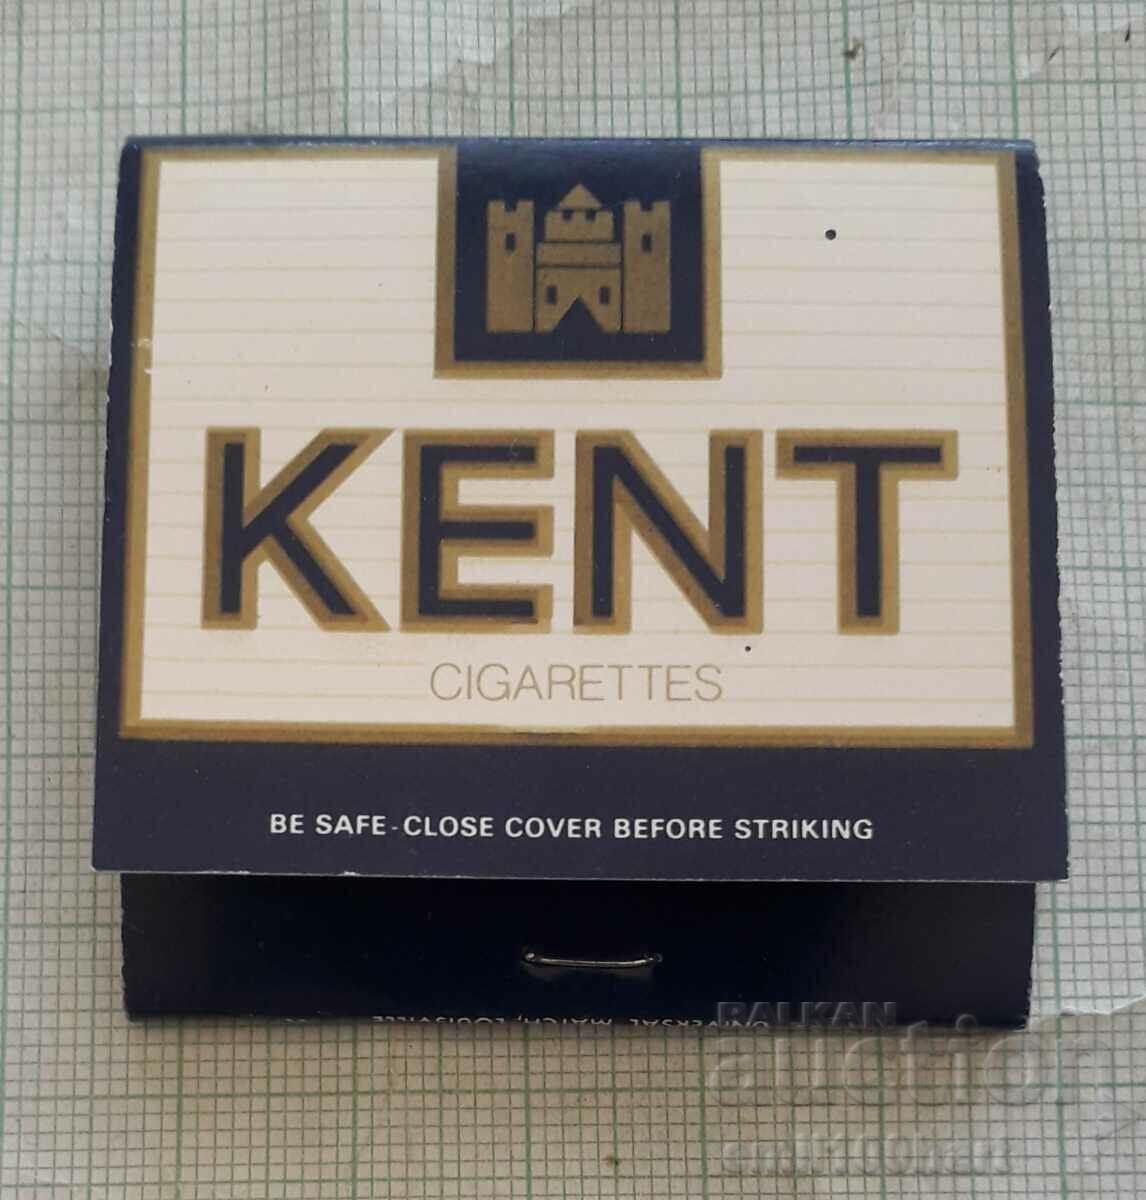 Advertising match of KENT KENT cigarettes